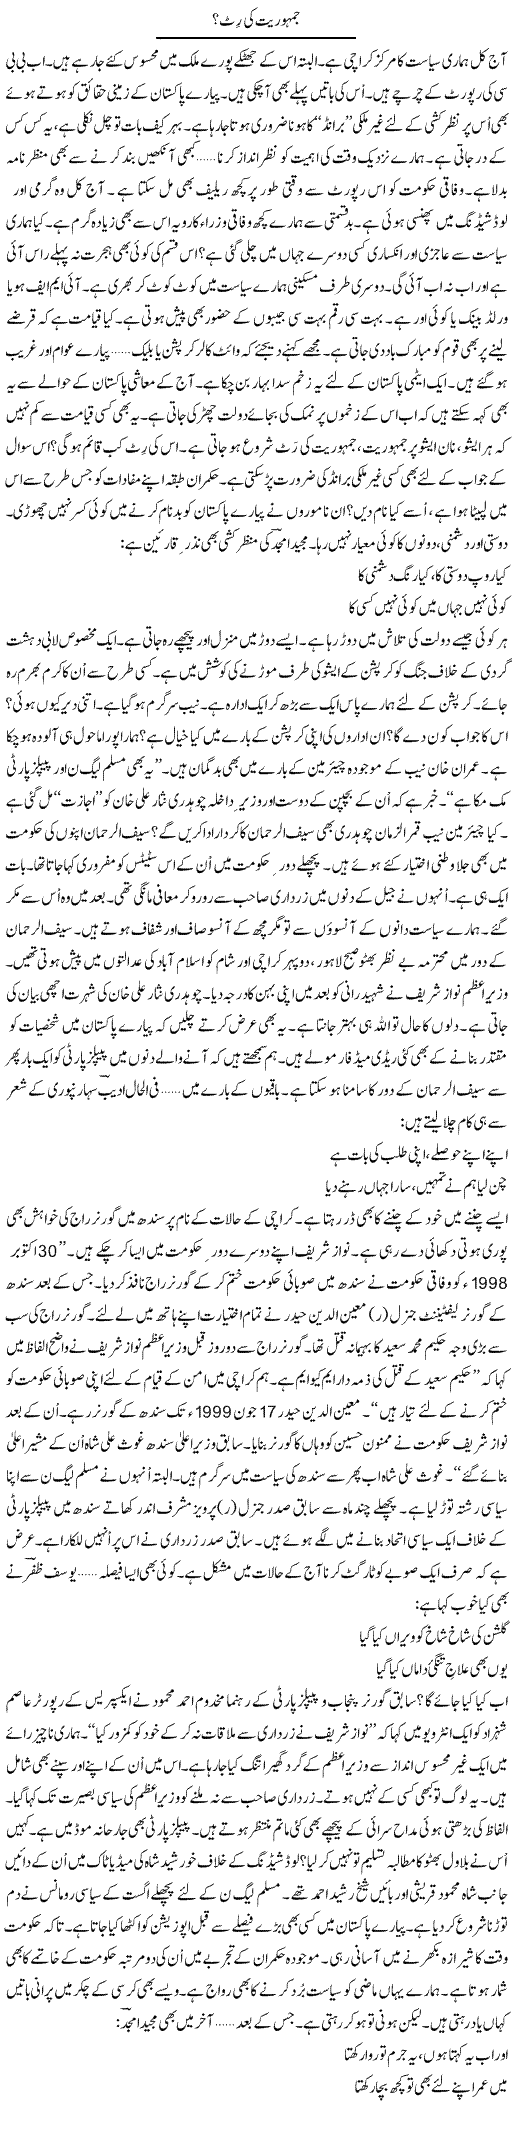 Jamhuriat Ki Ritt | Ejaz Hafeez Khan | Daily Urdu Columns